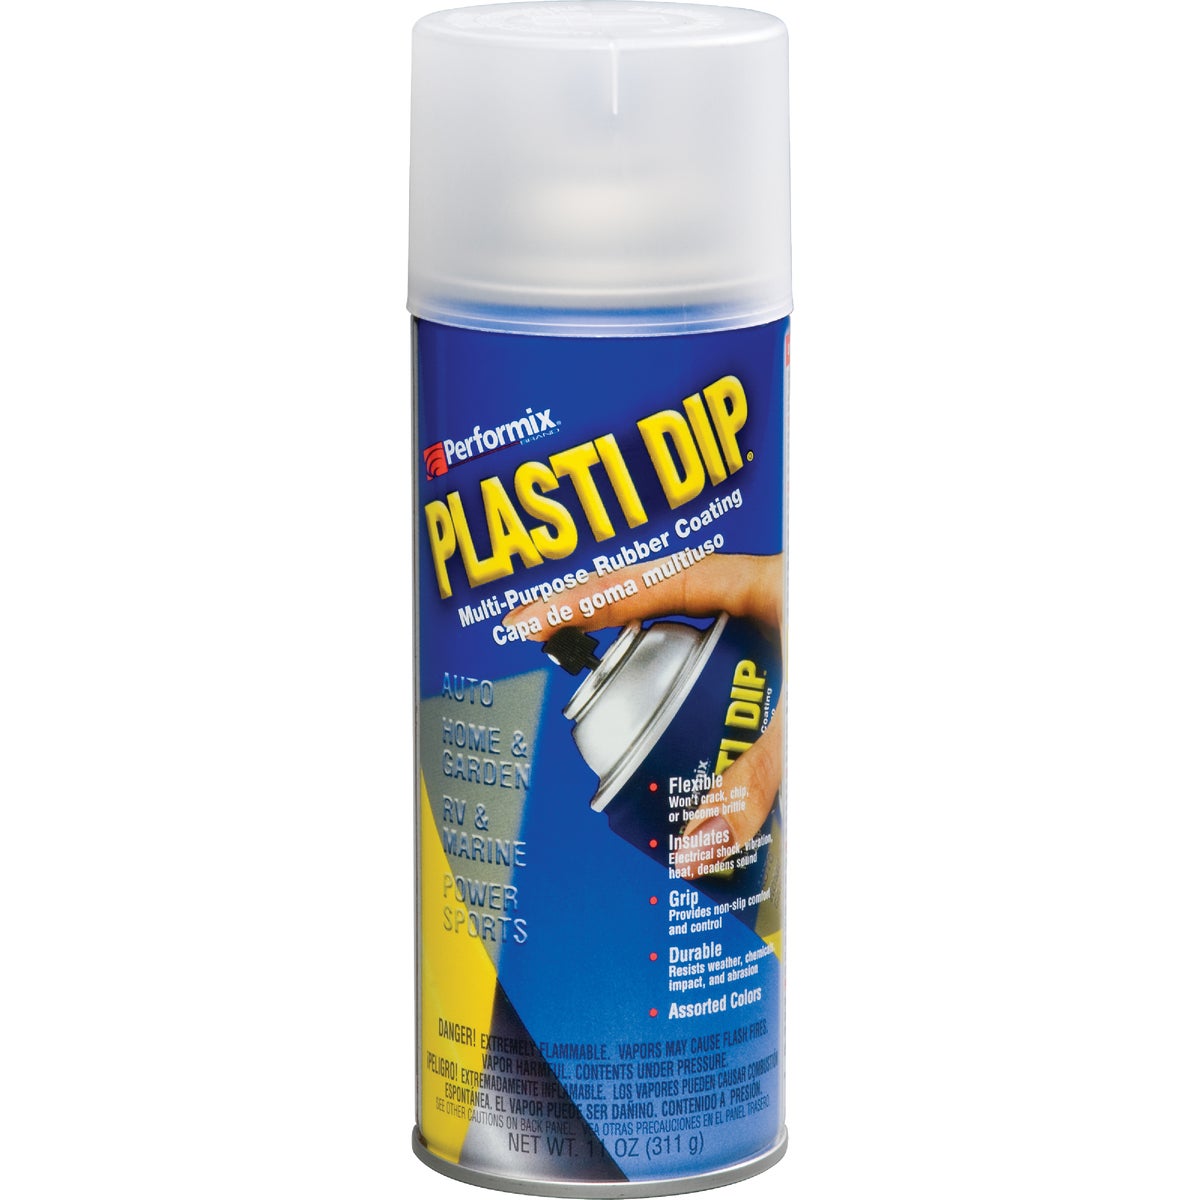 PLASTI DIP Performix 11209-6 Performix Plasti Dip Clear 11 Oz. Aerosol Rubber Coating Rubber Coating Spray Paint 11209-6